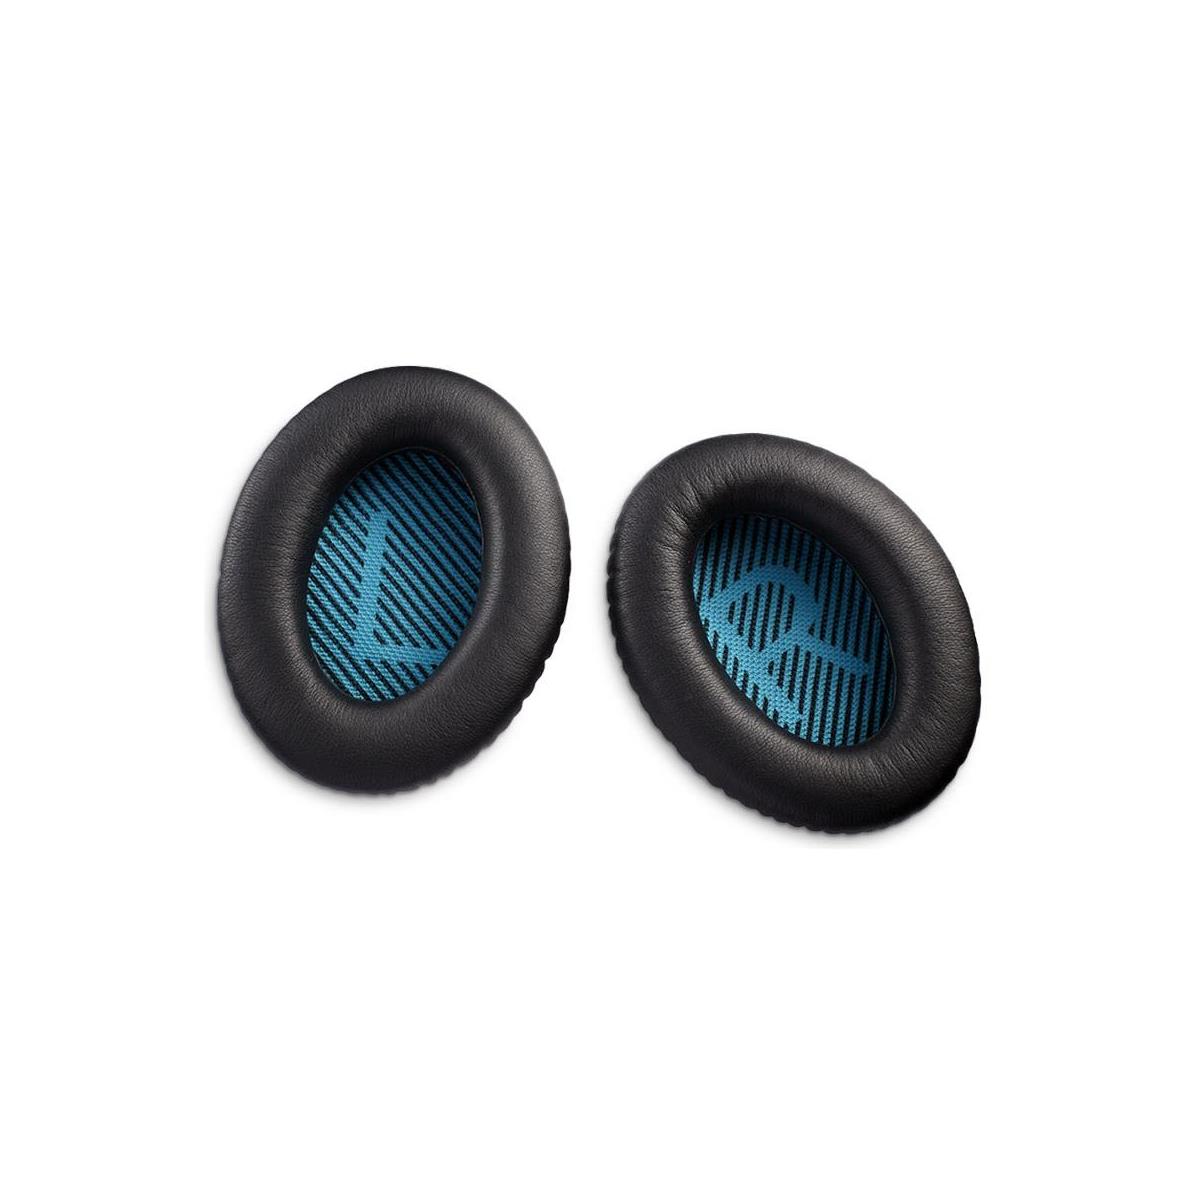 Image of Bose Ear Cushion Kit for QuietComfort 25 Headphones